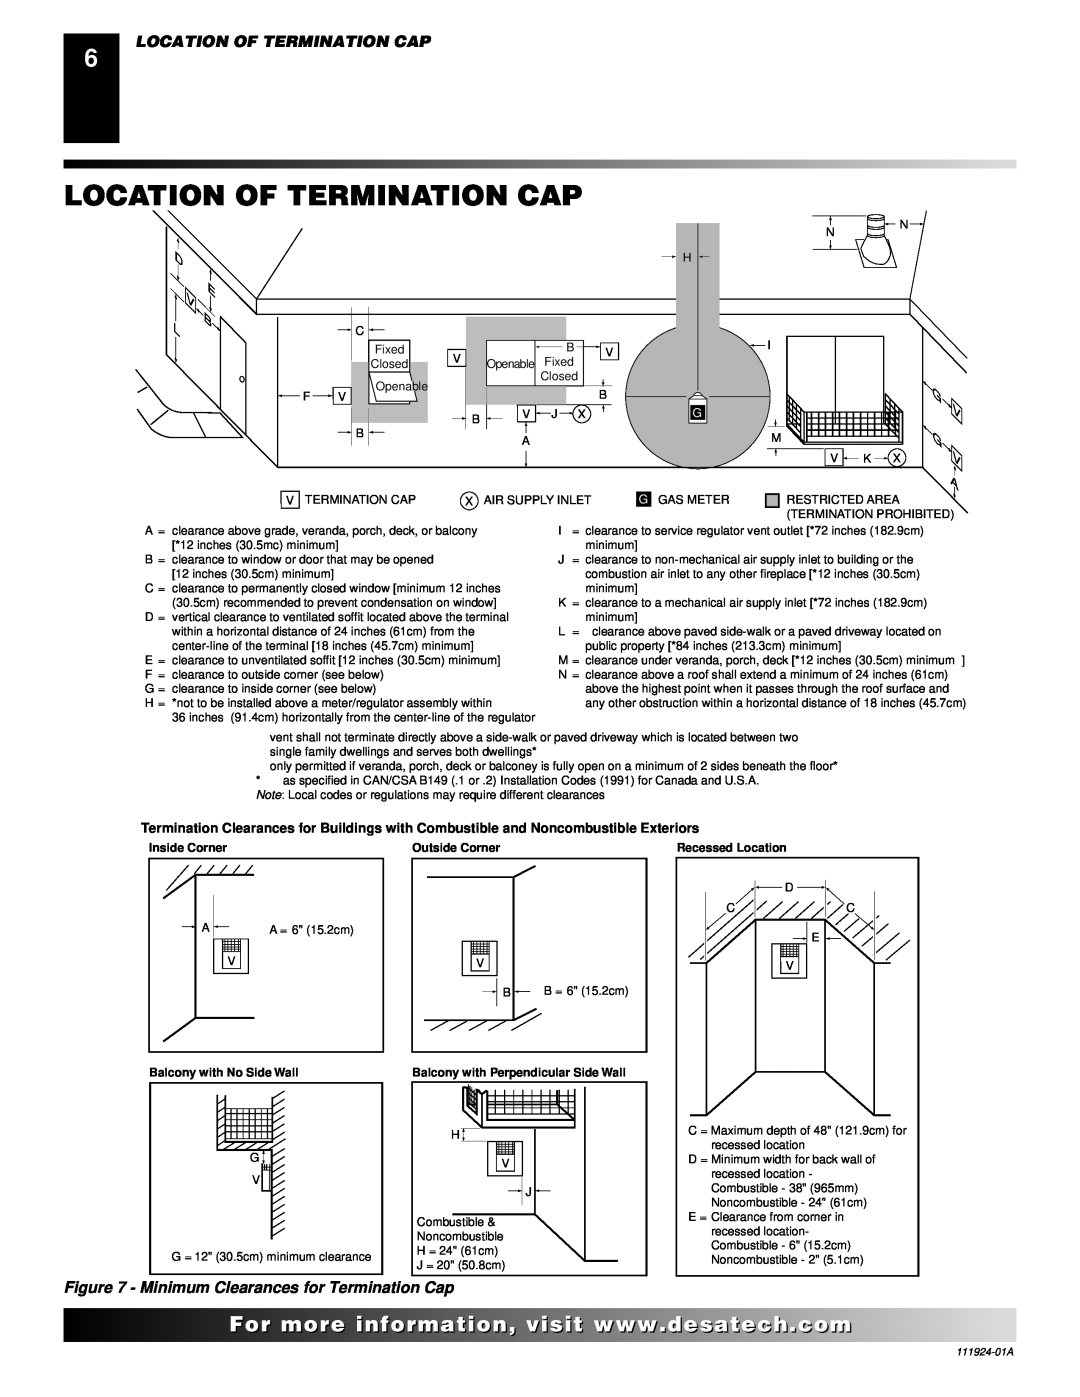 Desa K36EP, K36EN Location Of Termination Cap, D E B L, V G V A, Minimum Clearances for Termination Cap, Inside Corner 